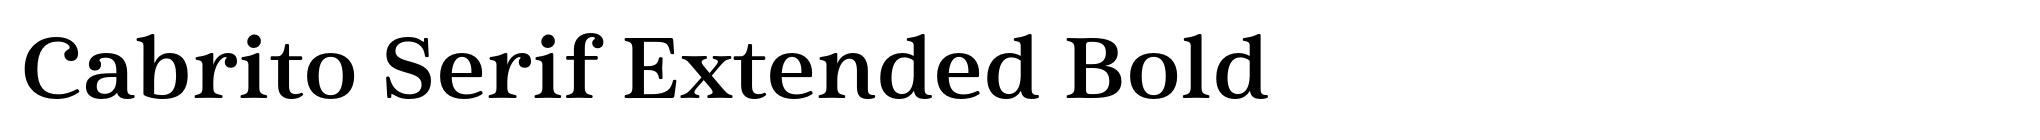 Cabrito Serif Extended Bold image